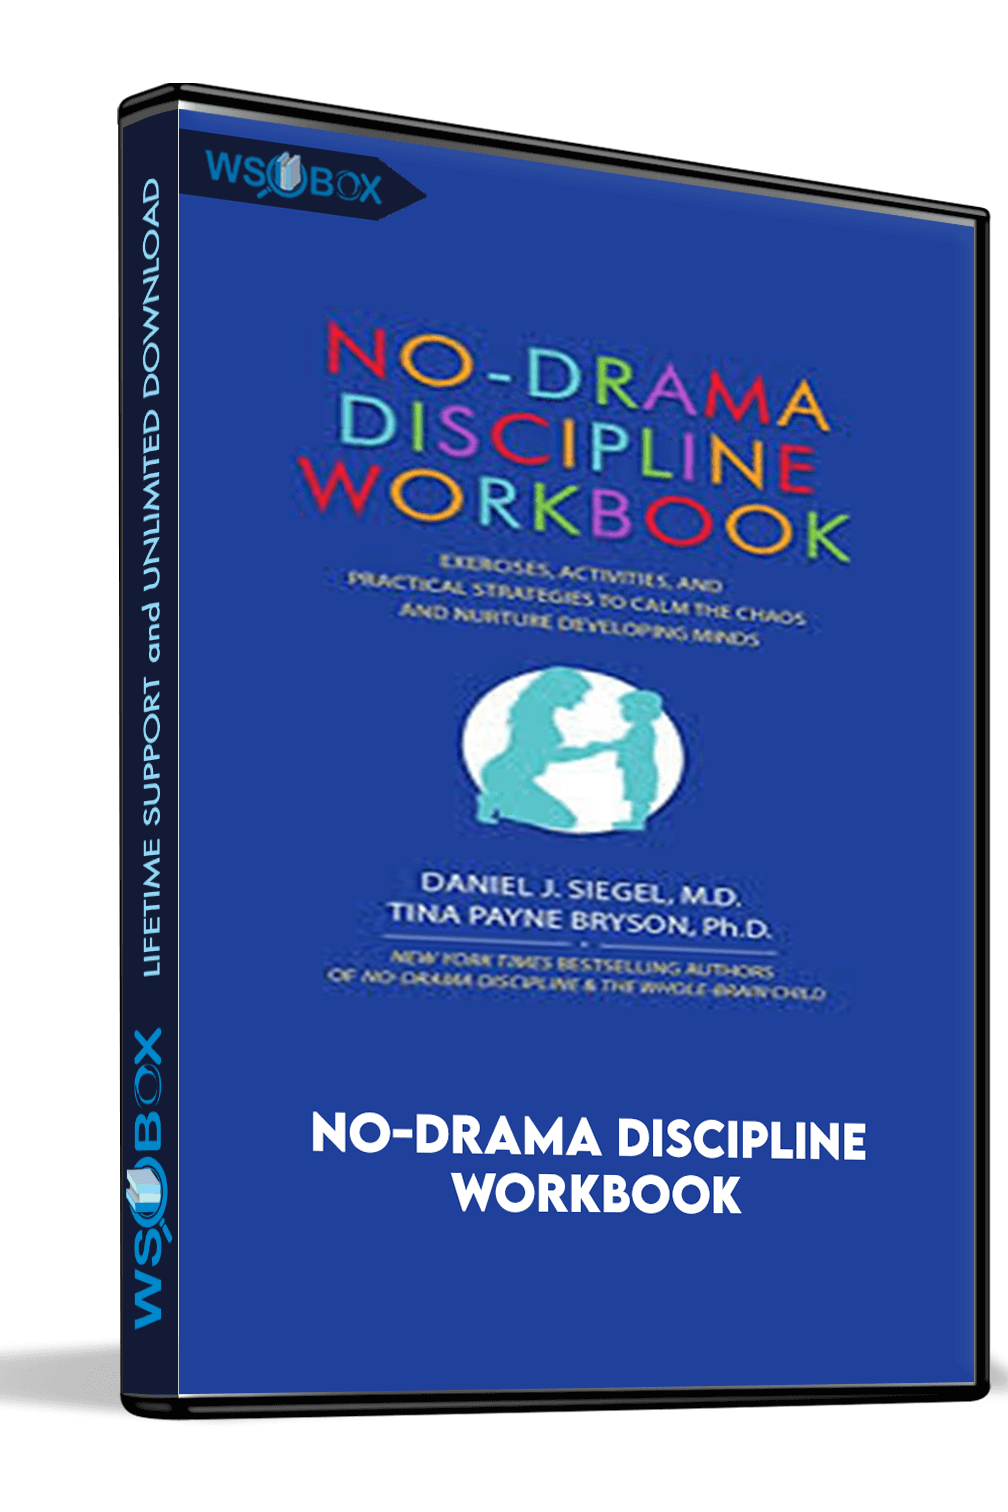 No-Drama Discipline Workbook